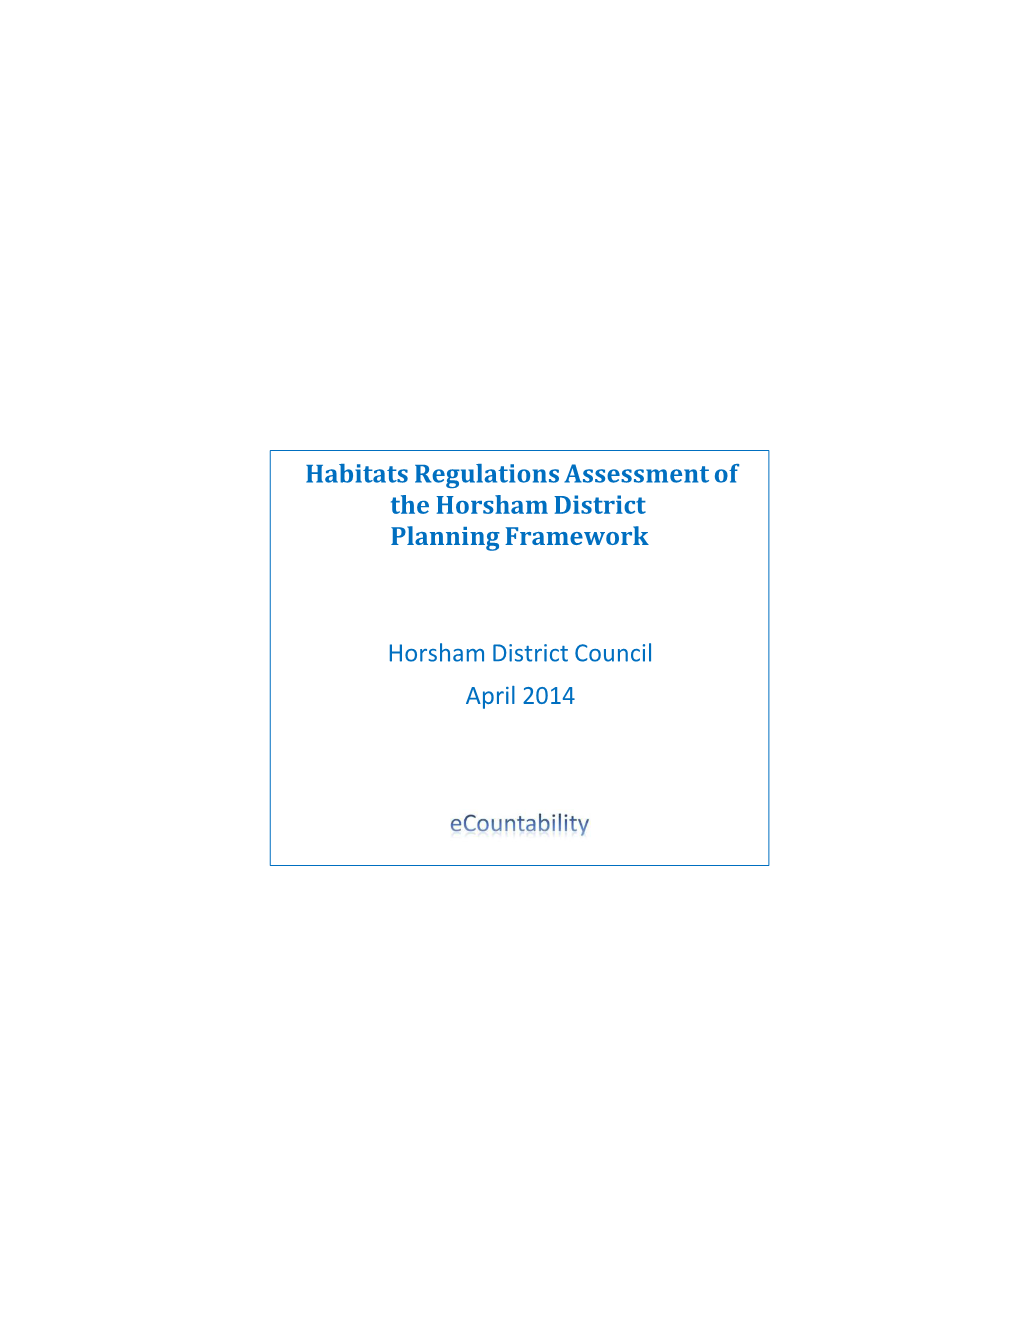 Habitat Regulation Assessment